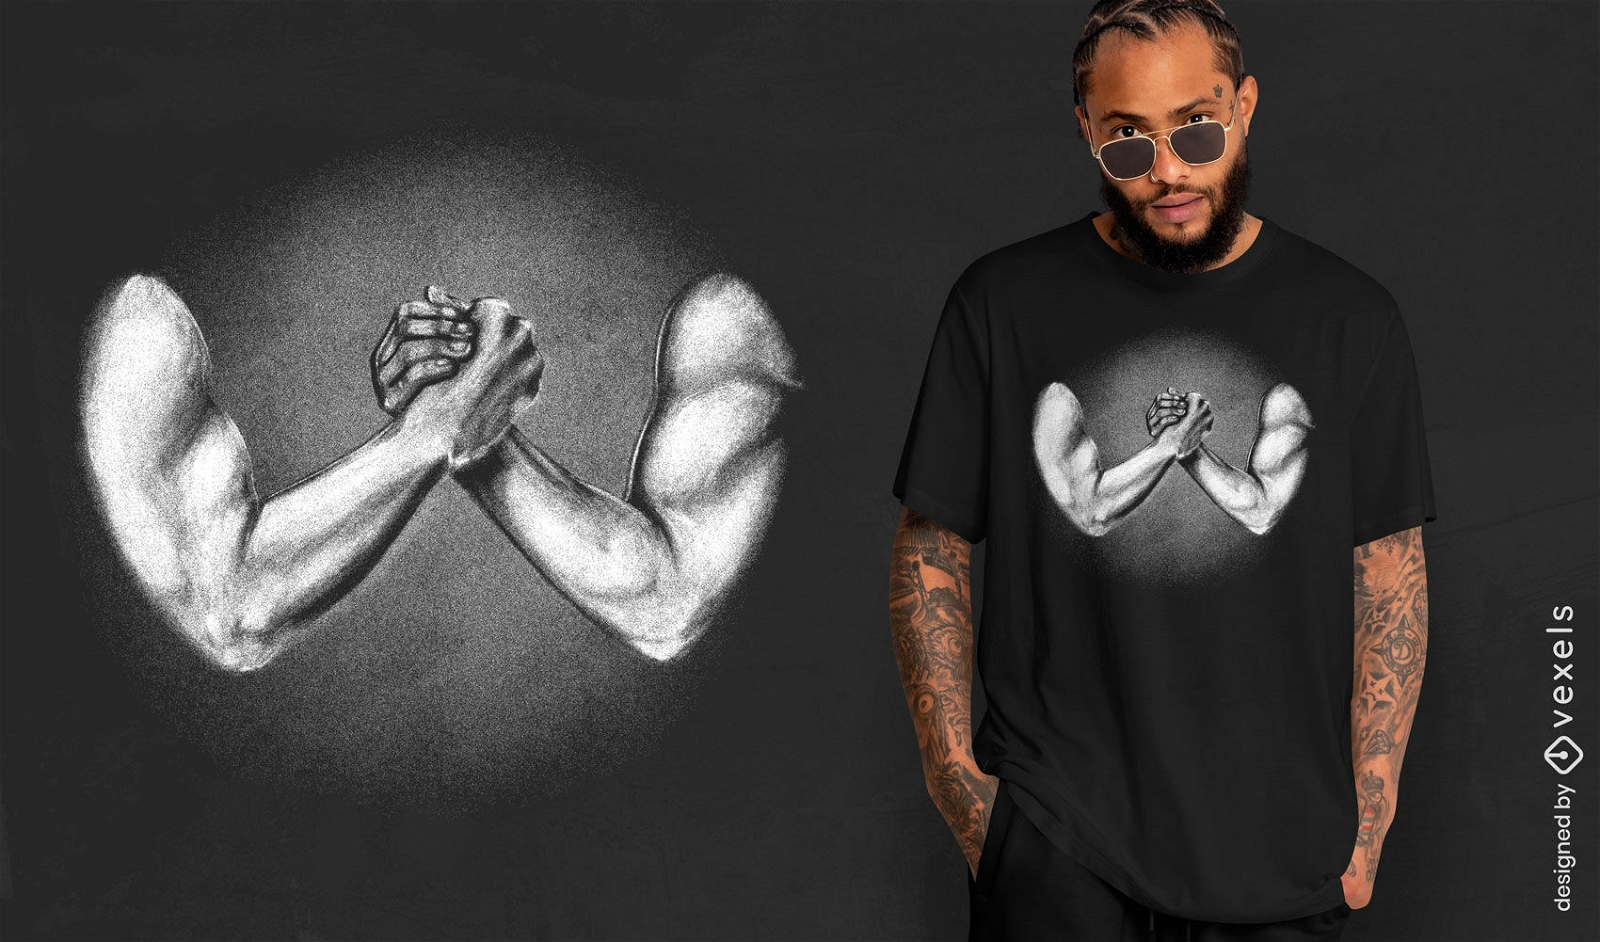 Strong people arm wrestling t-shirt design